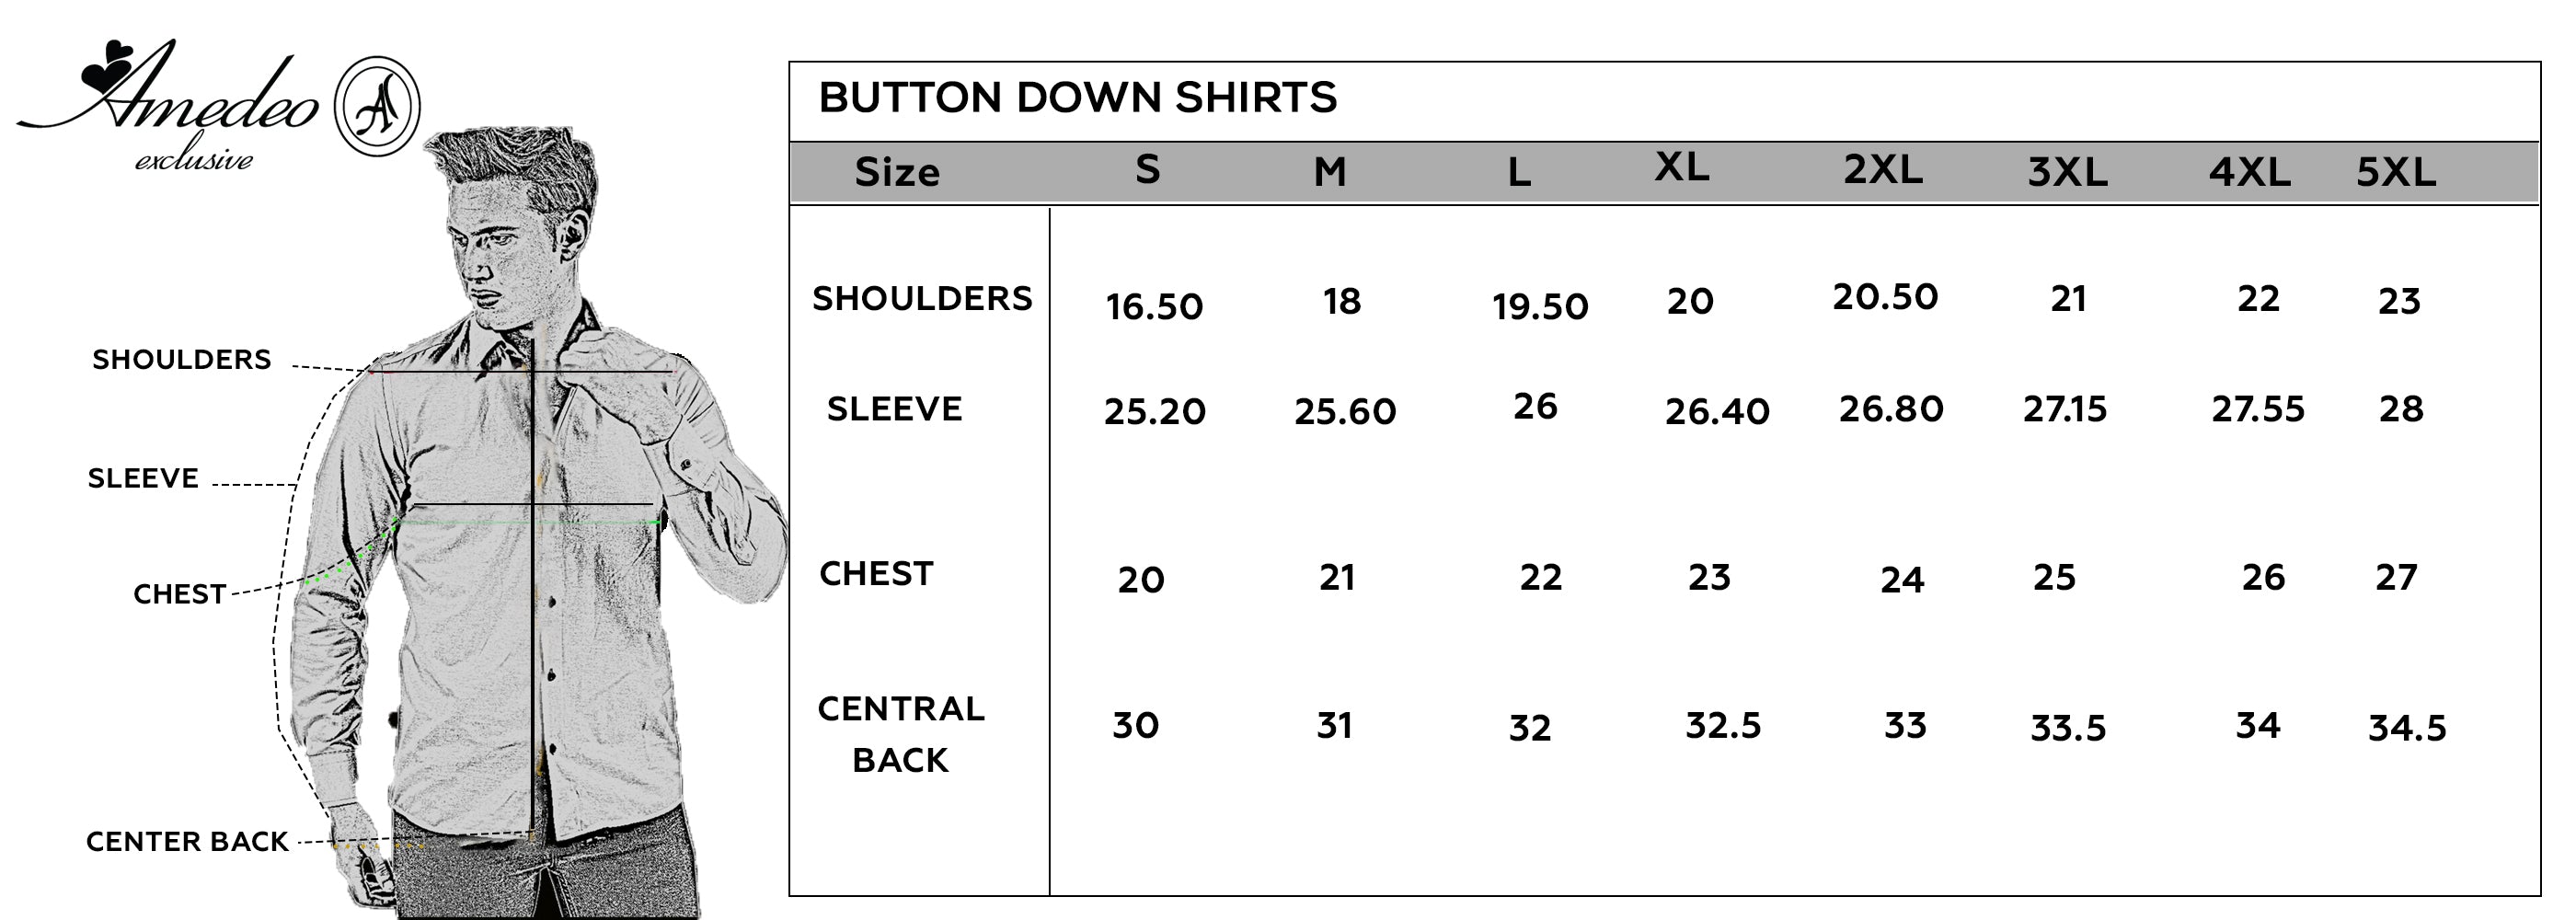 dress shirt size guide